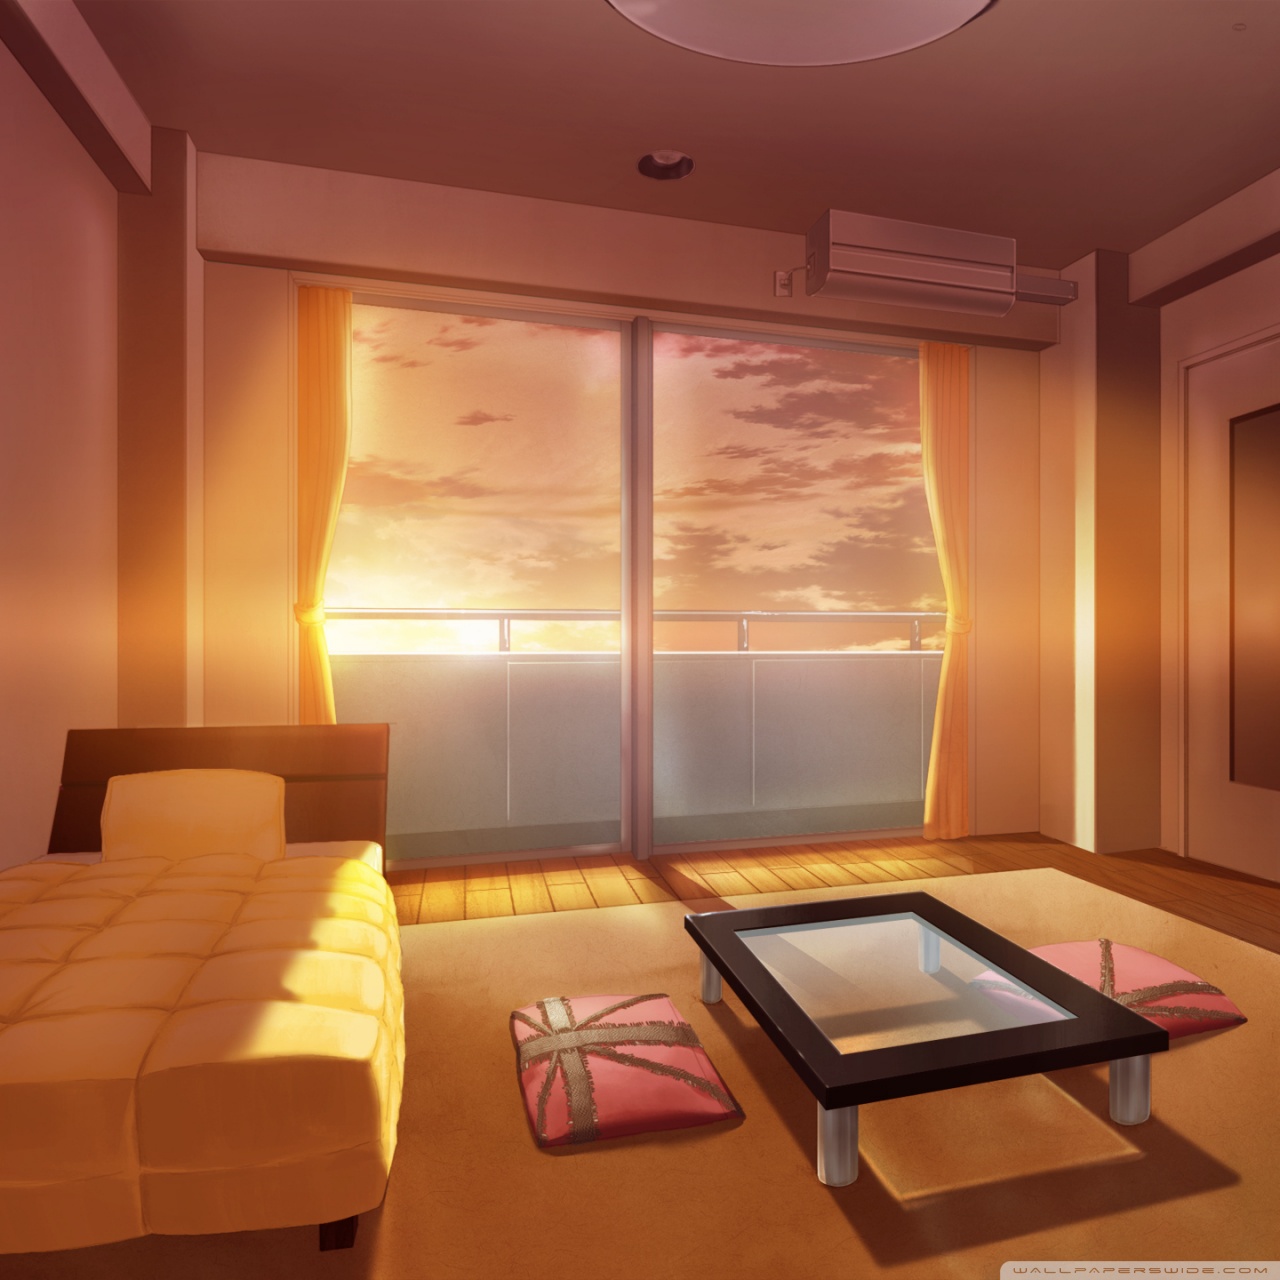 Sunset Light In Room - HD Wallpaper 